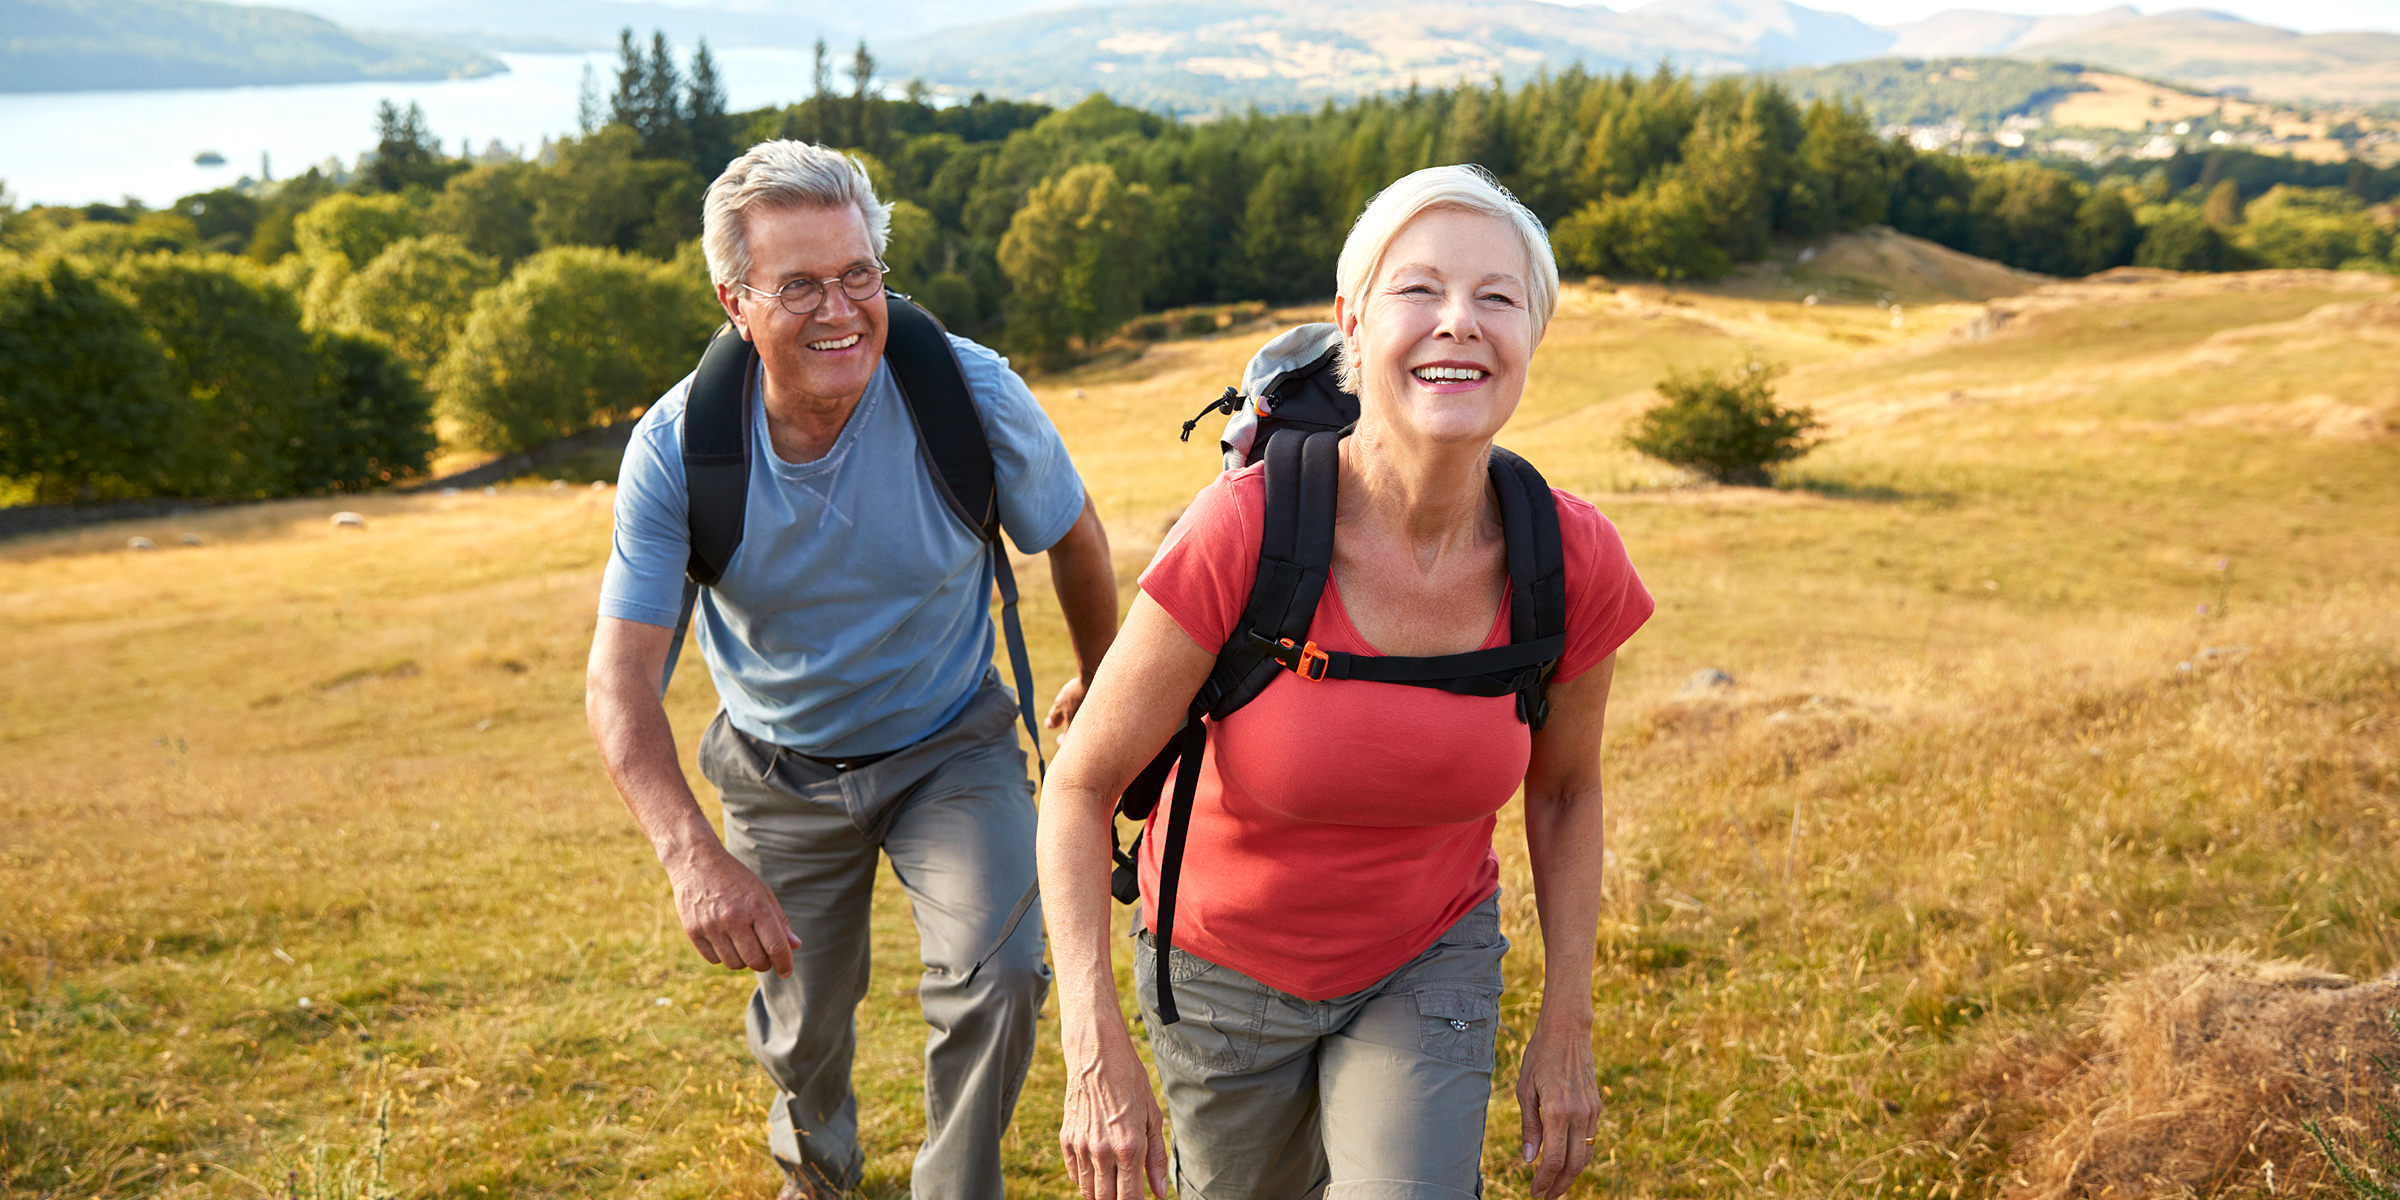 An elderly couple hiking | Source: Shutterstock